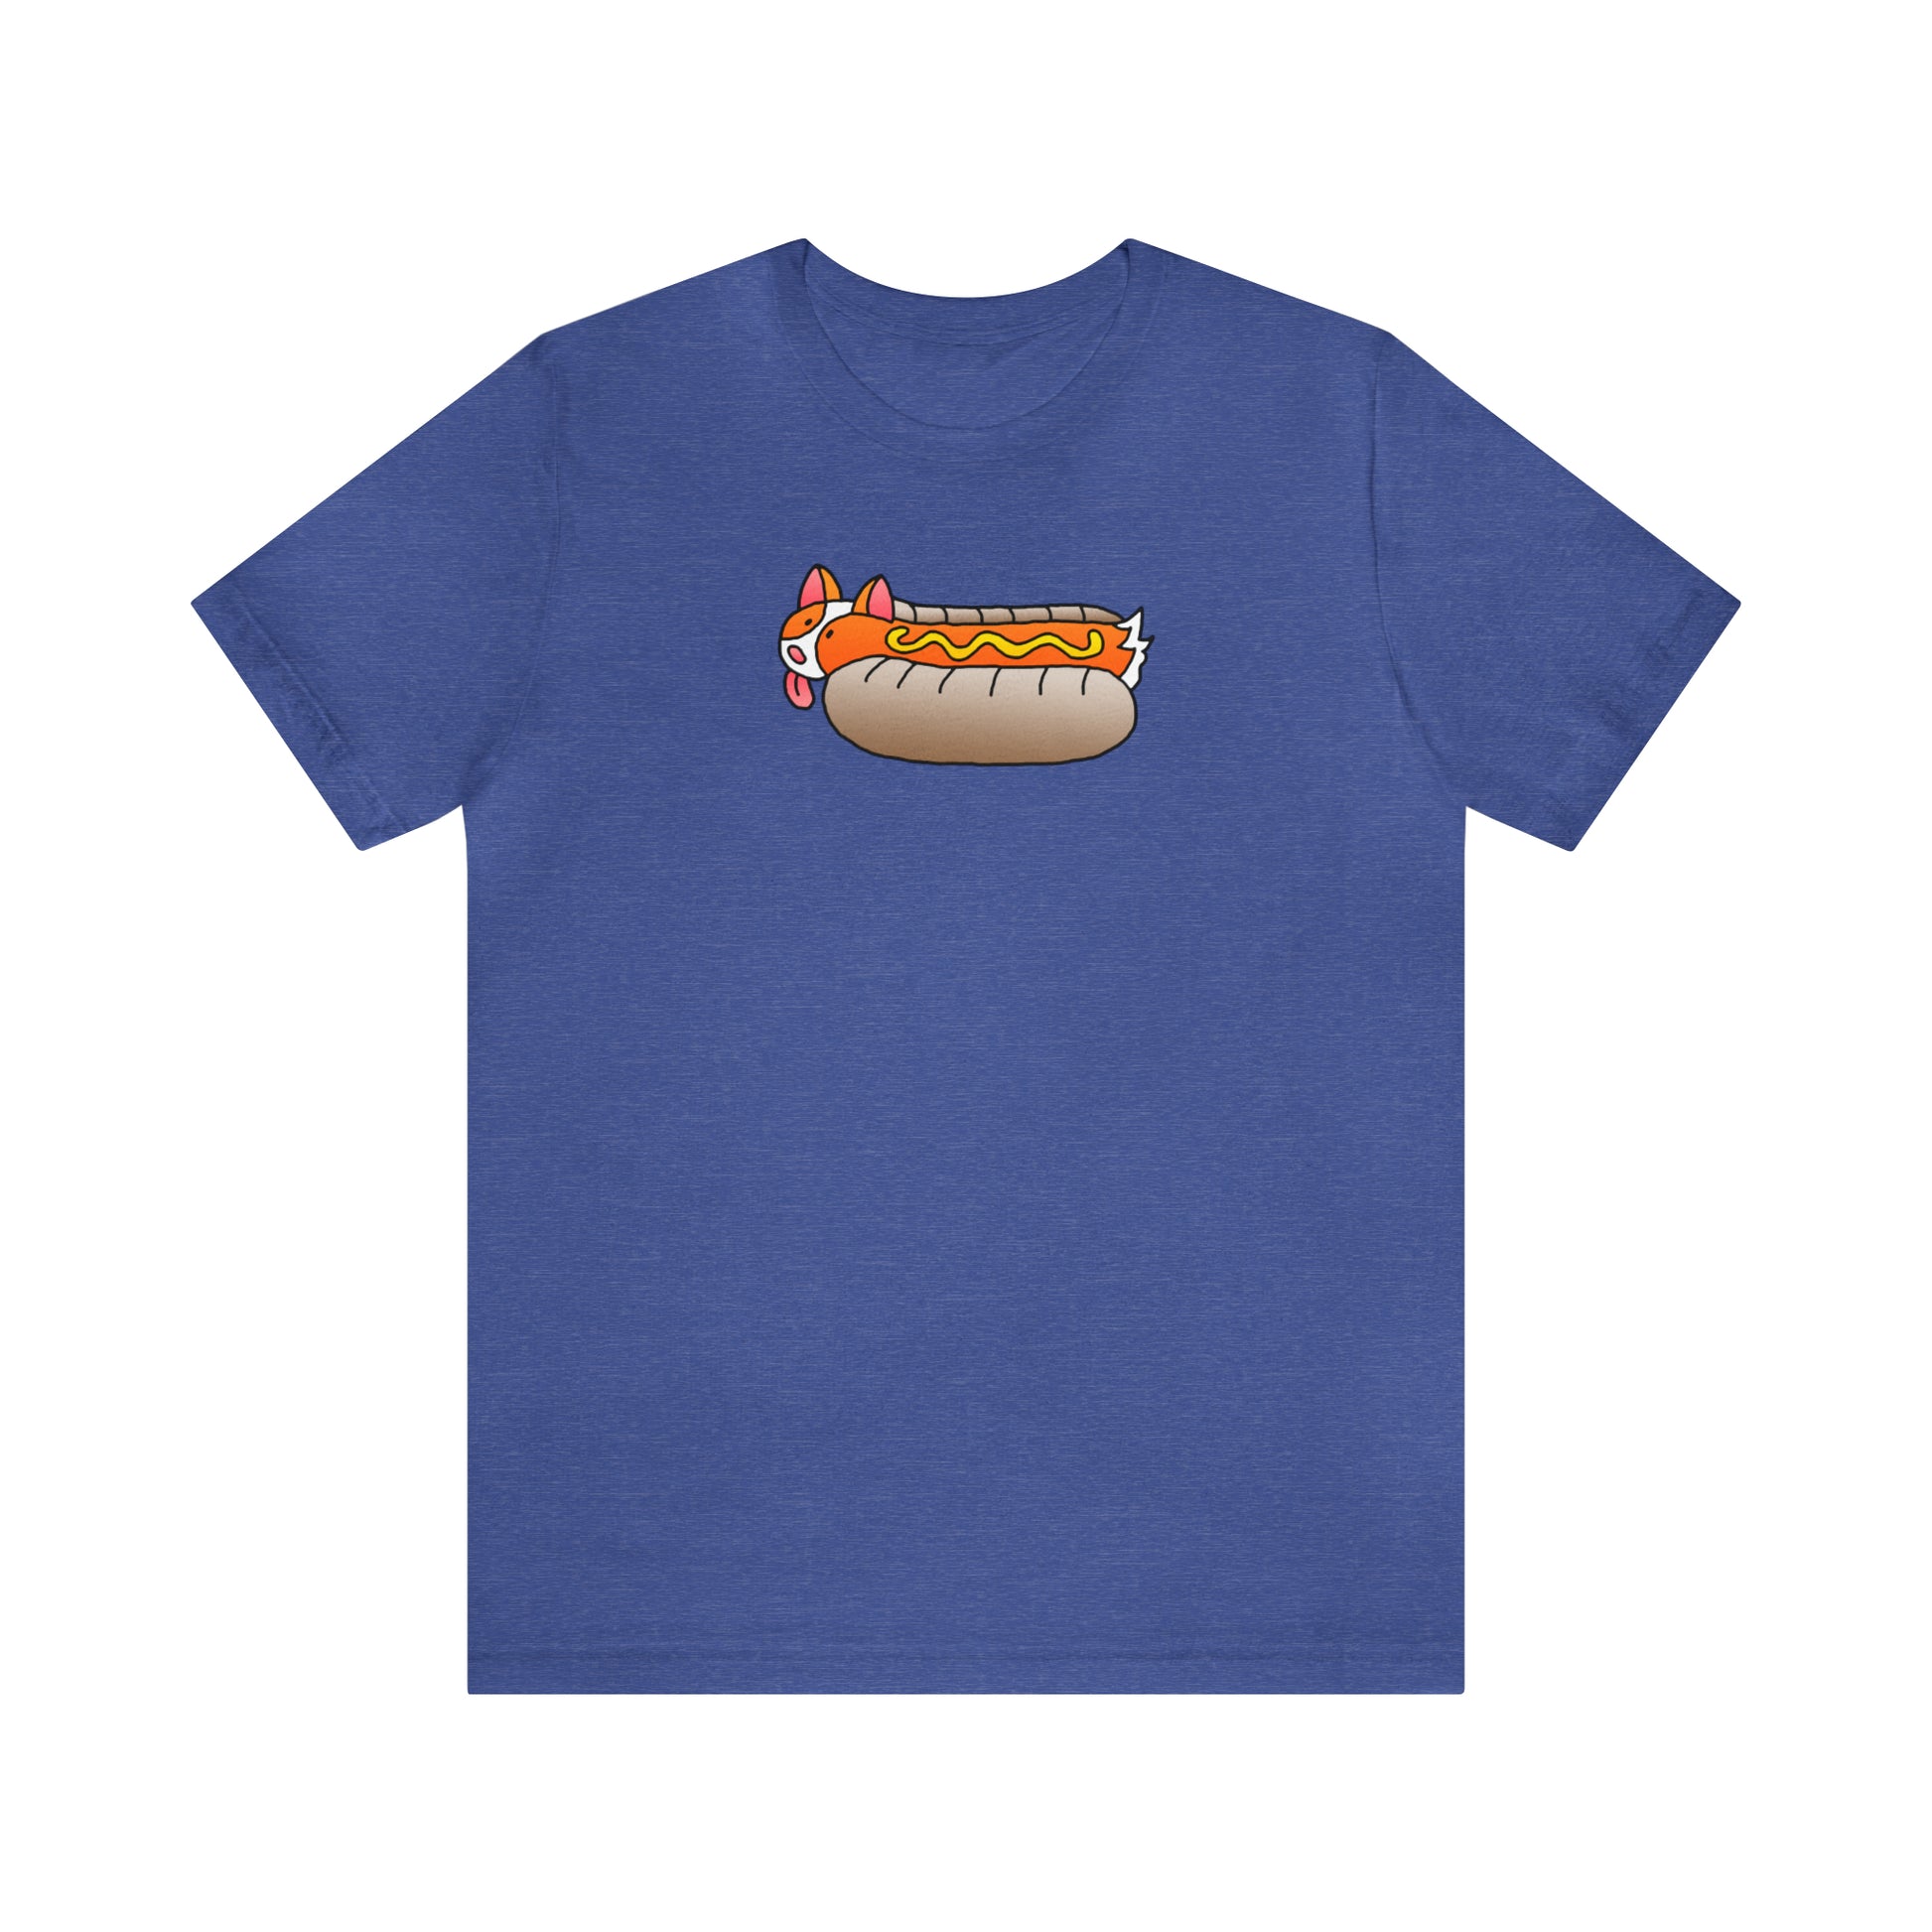 Blue front ShoBeaRo logo unisex t-shirt short sleeve men women shirt corgi hot dog I saved a life